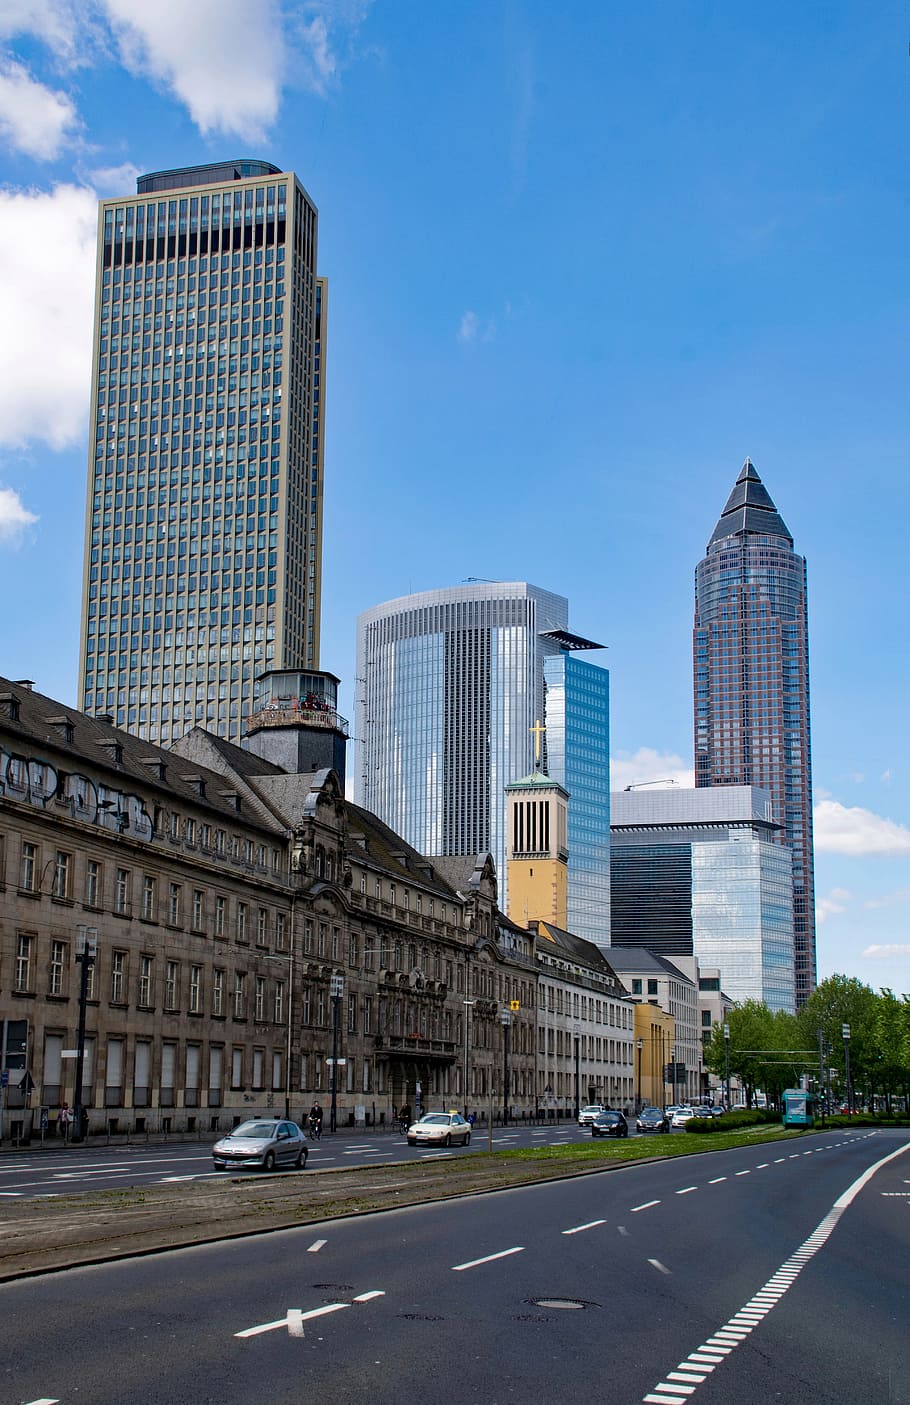 Frankfurt, Hesse, Germany, Skyline, skyscraper, architecture, skyscrapers, places of interest, fair, messeturm